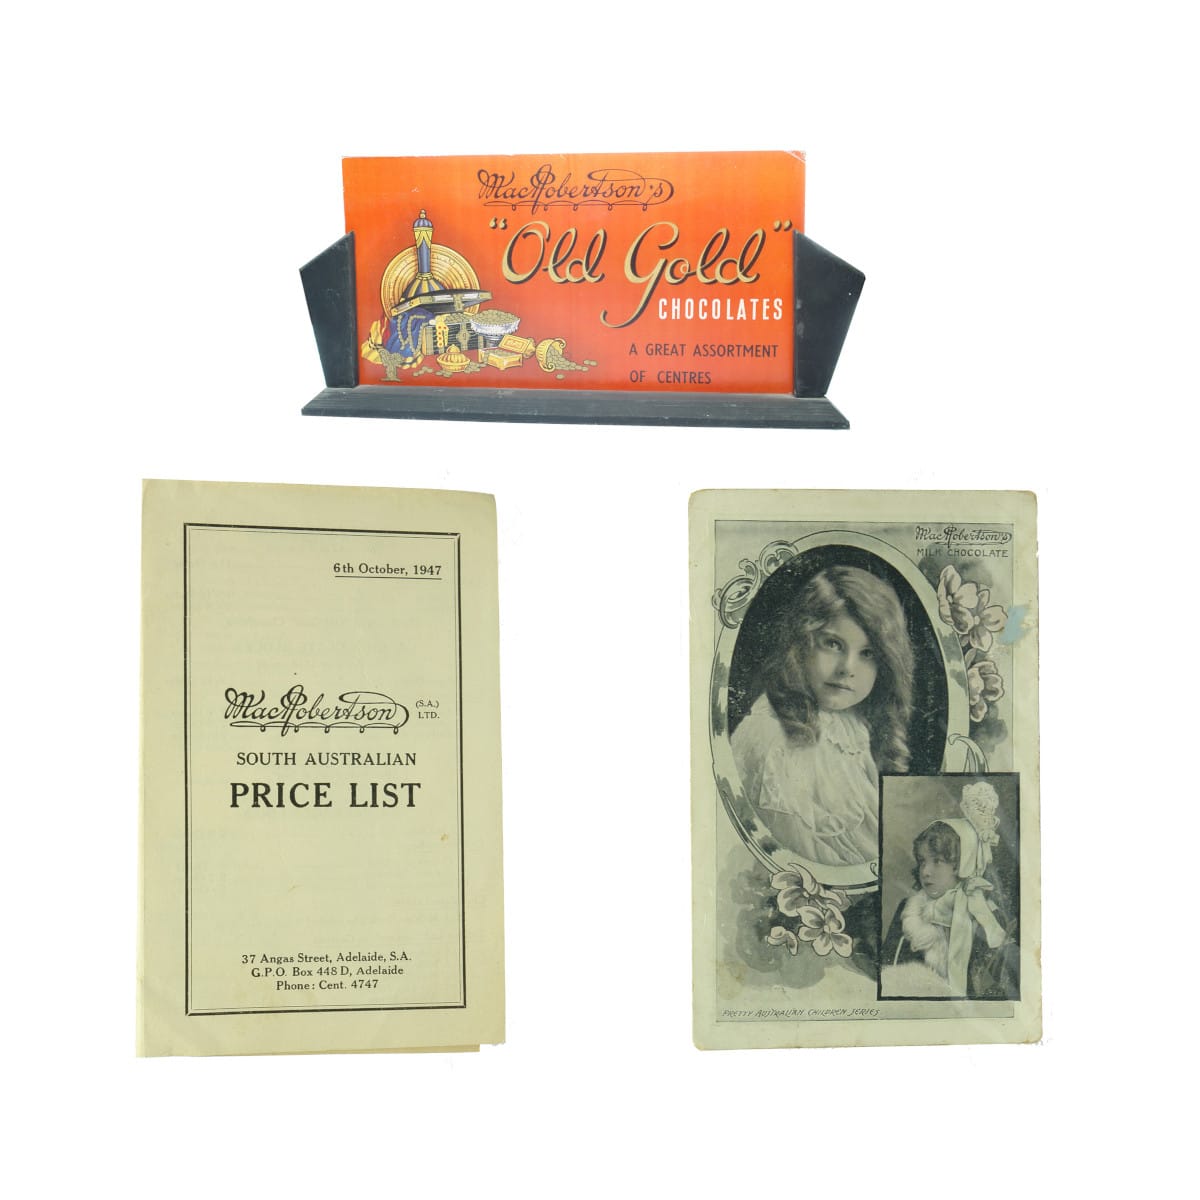 3 Pieces of MacRobertsons Ephemera/Advertising: Old Gold Chocolates Display Stand; 1947 South Australian Price List; 1906 Postcard.